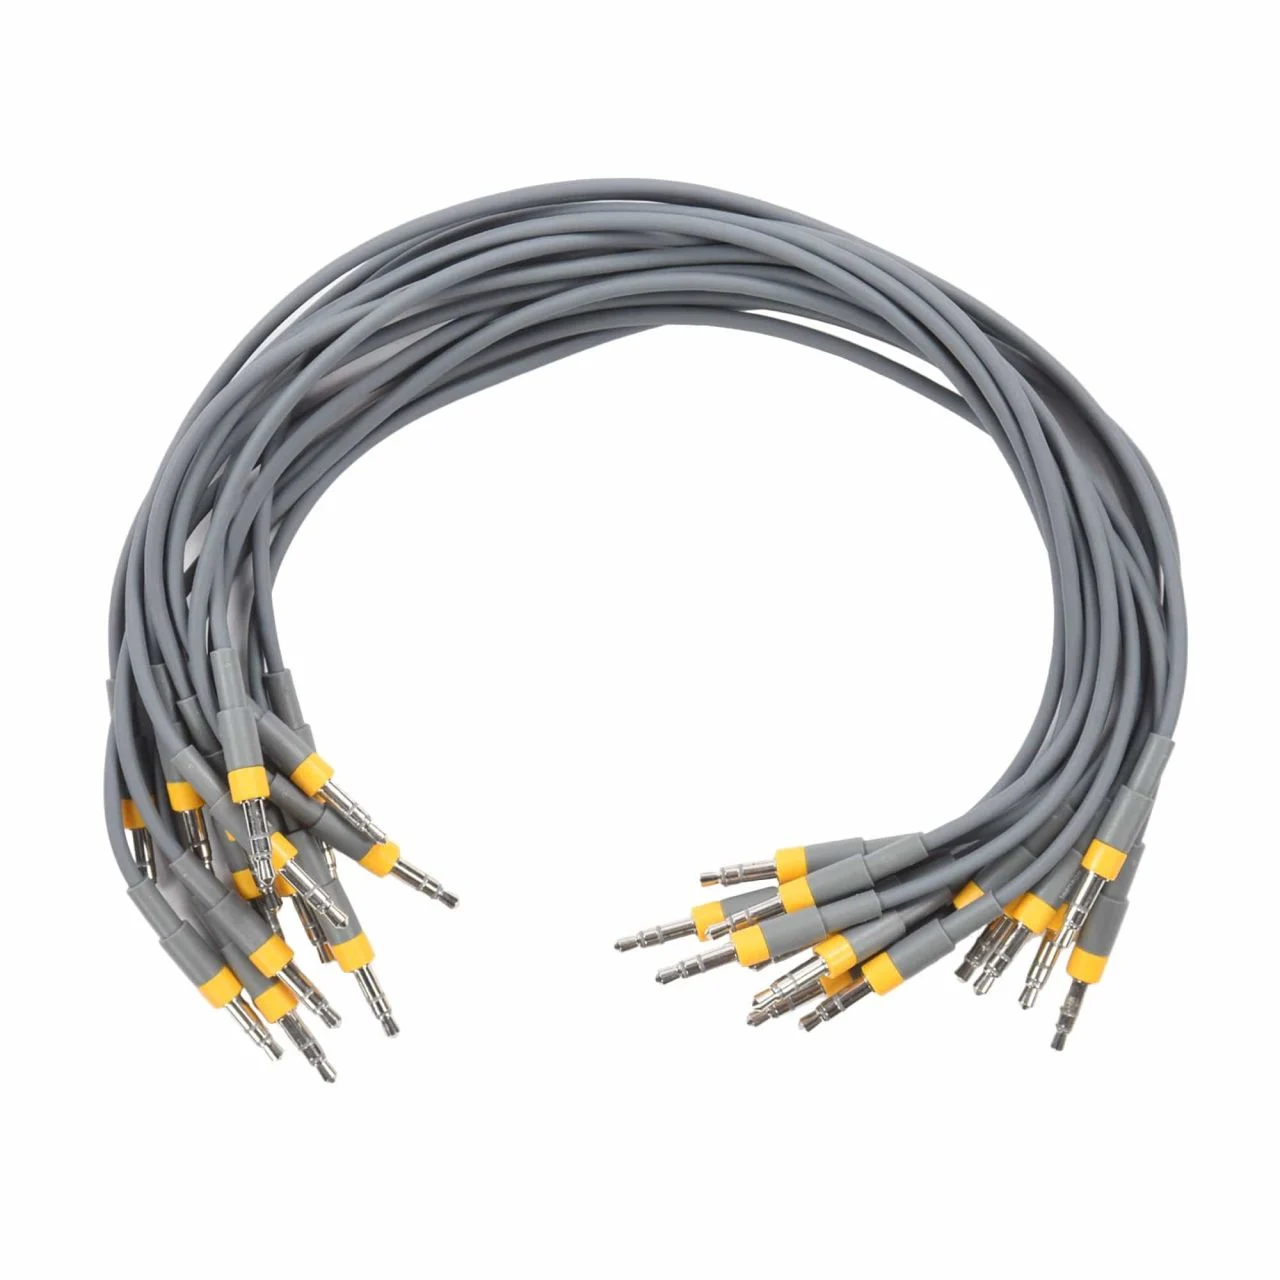 Cable Kit Grande 300 mm - 15 Adet 3.5 mm Stereo (TRS) Kablo - 1